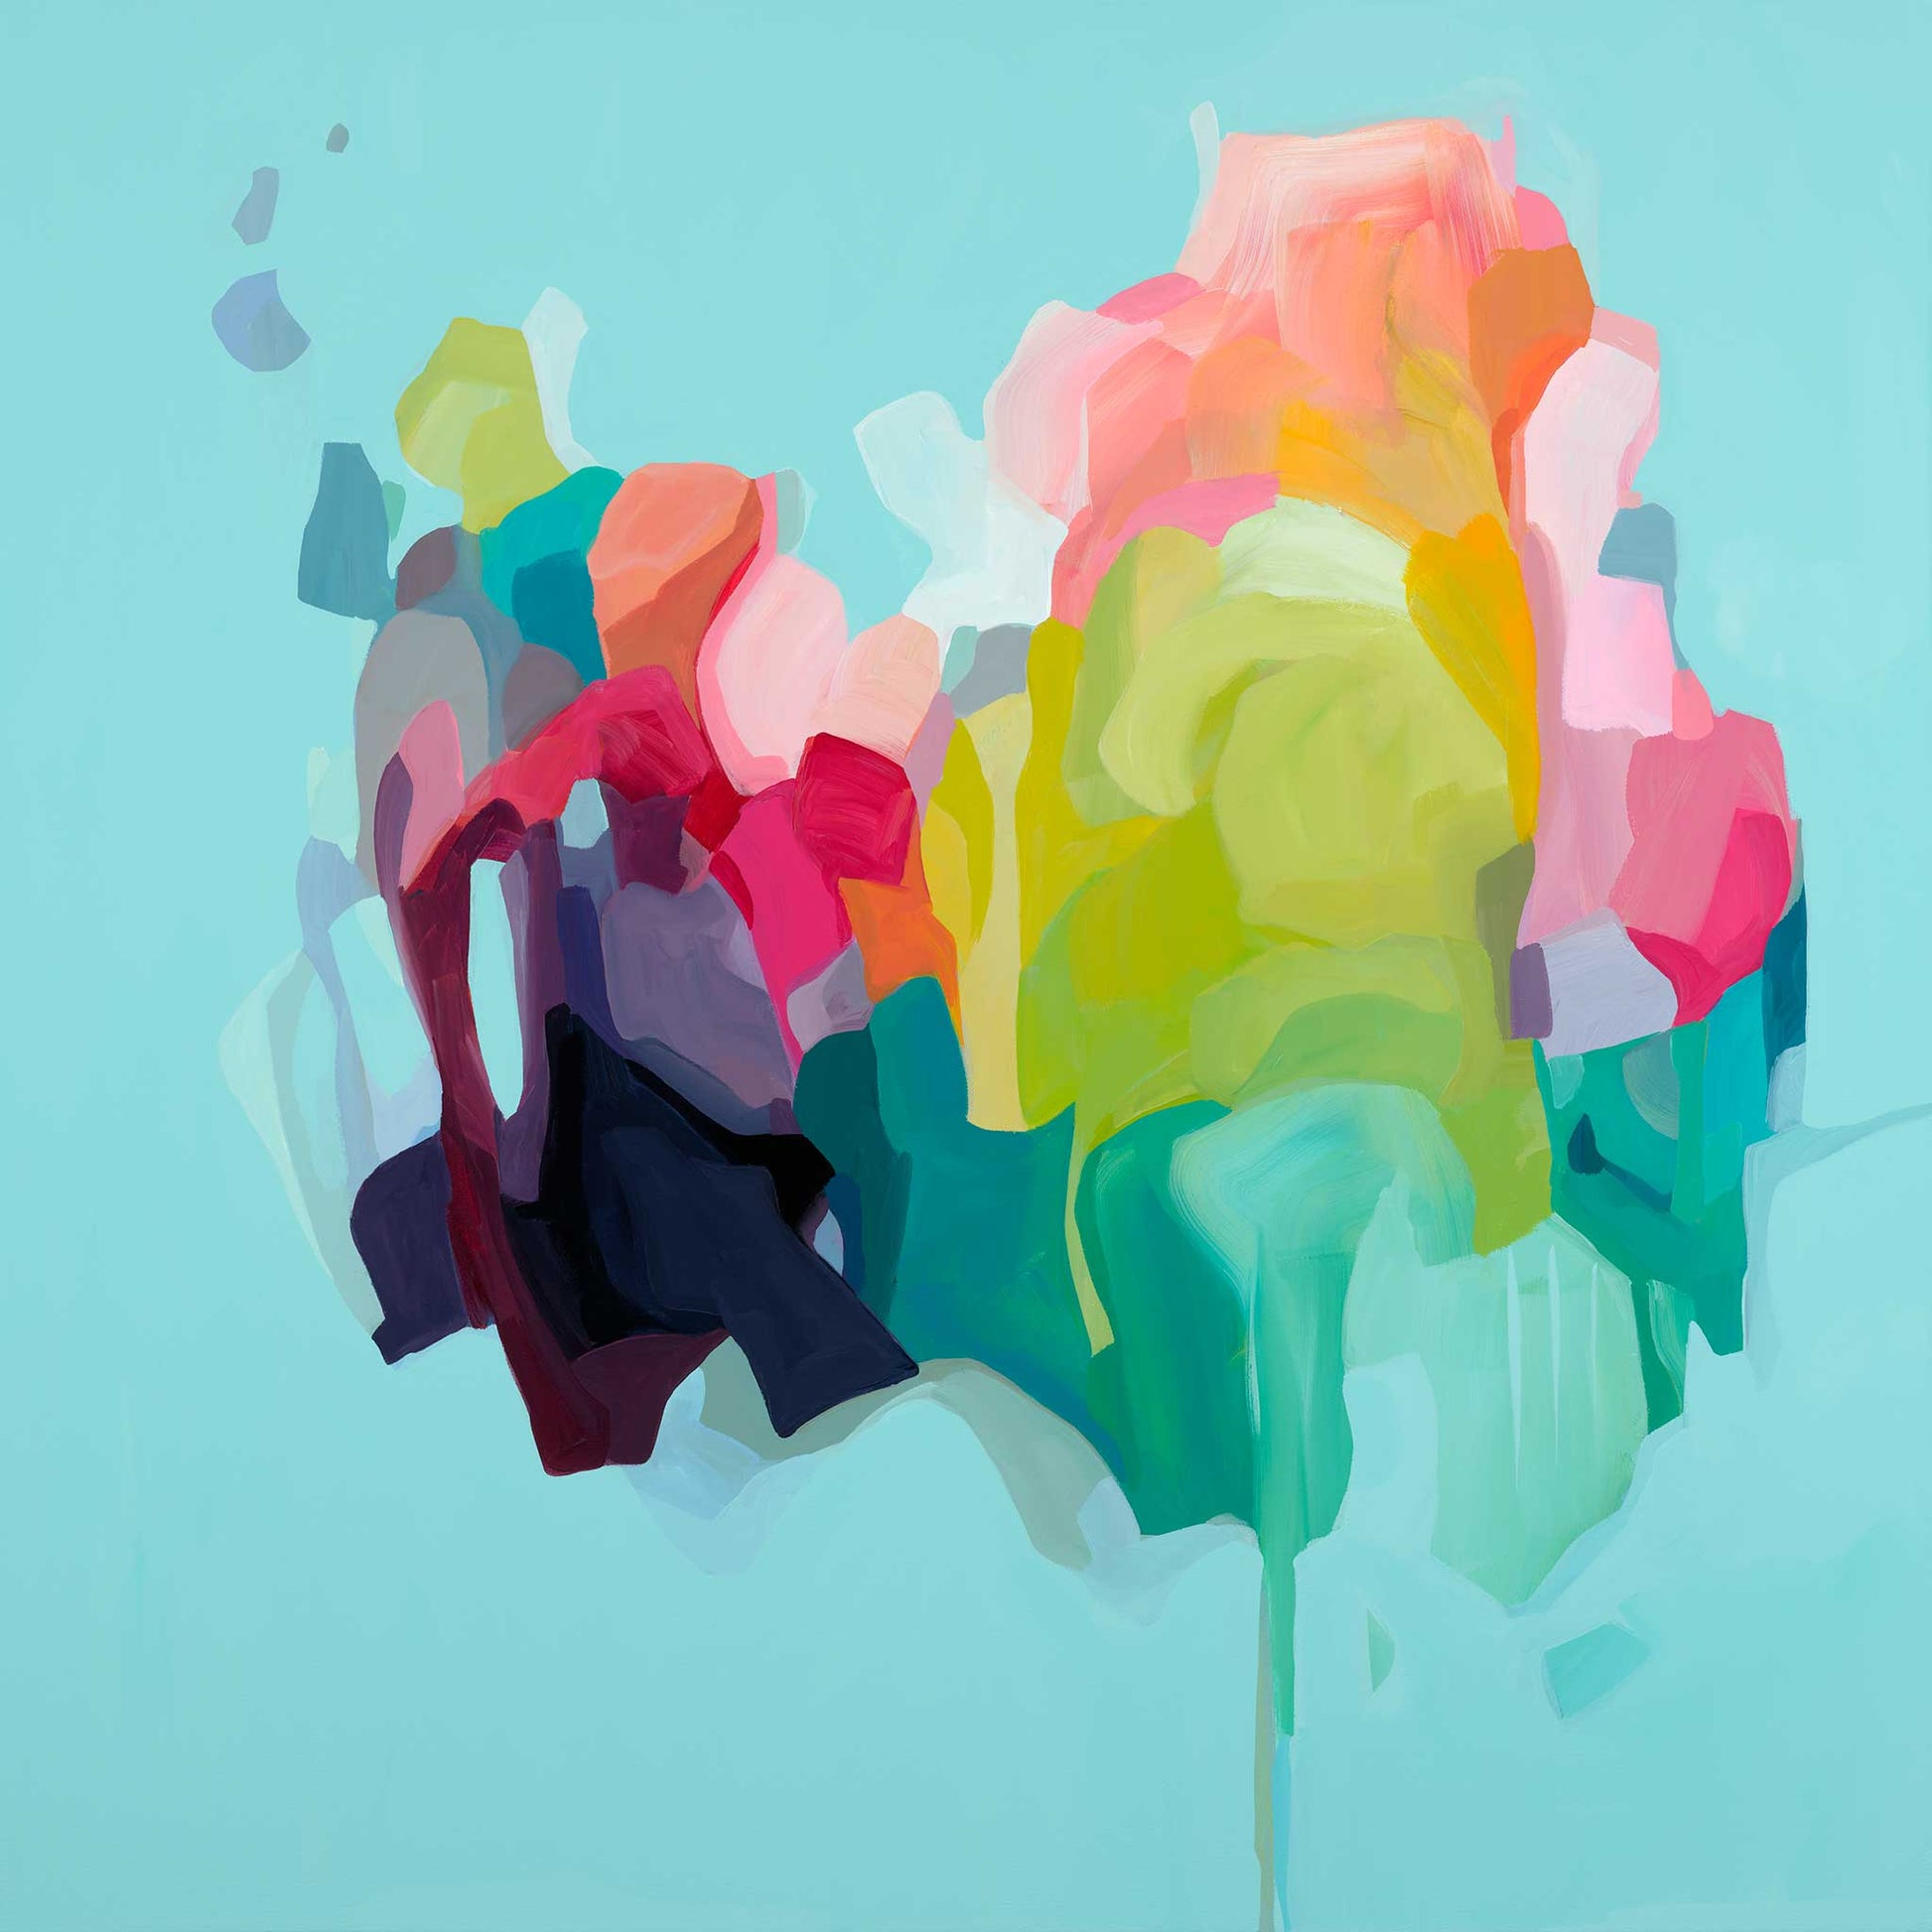 Aqua abstract art print by Canadian abstract artist Susannah Bleasby